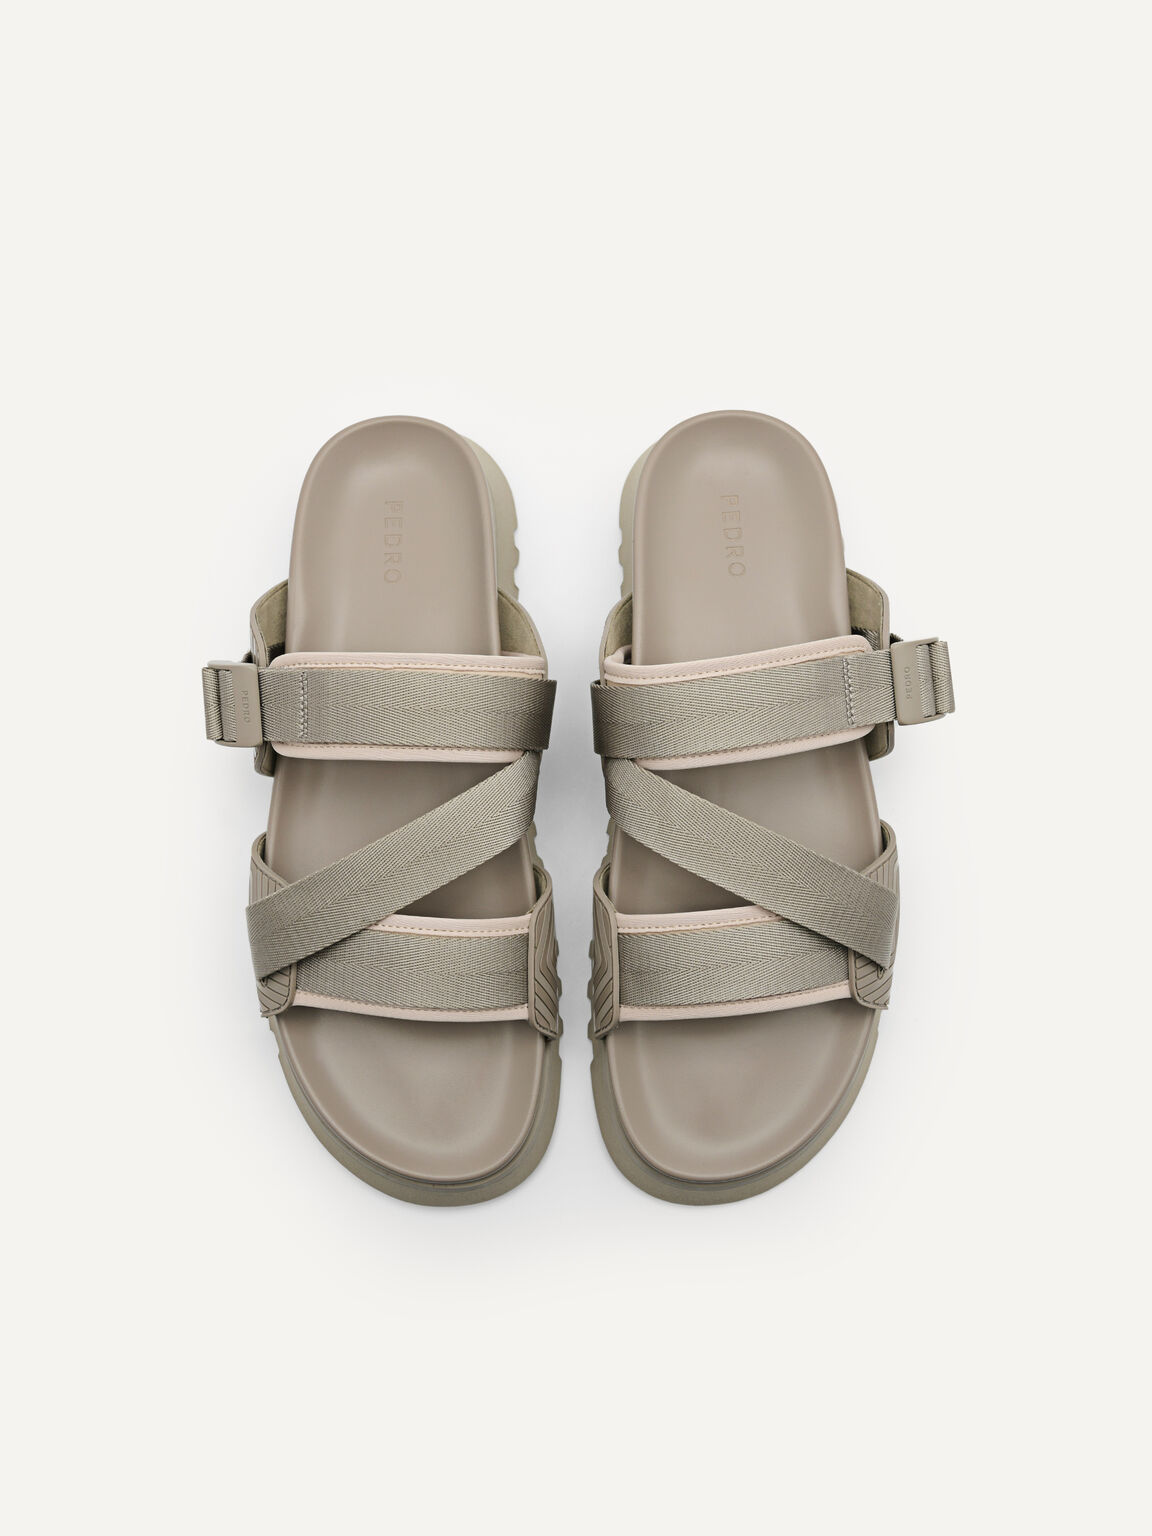 Nylon Strap Sandals, Taupe